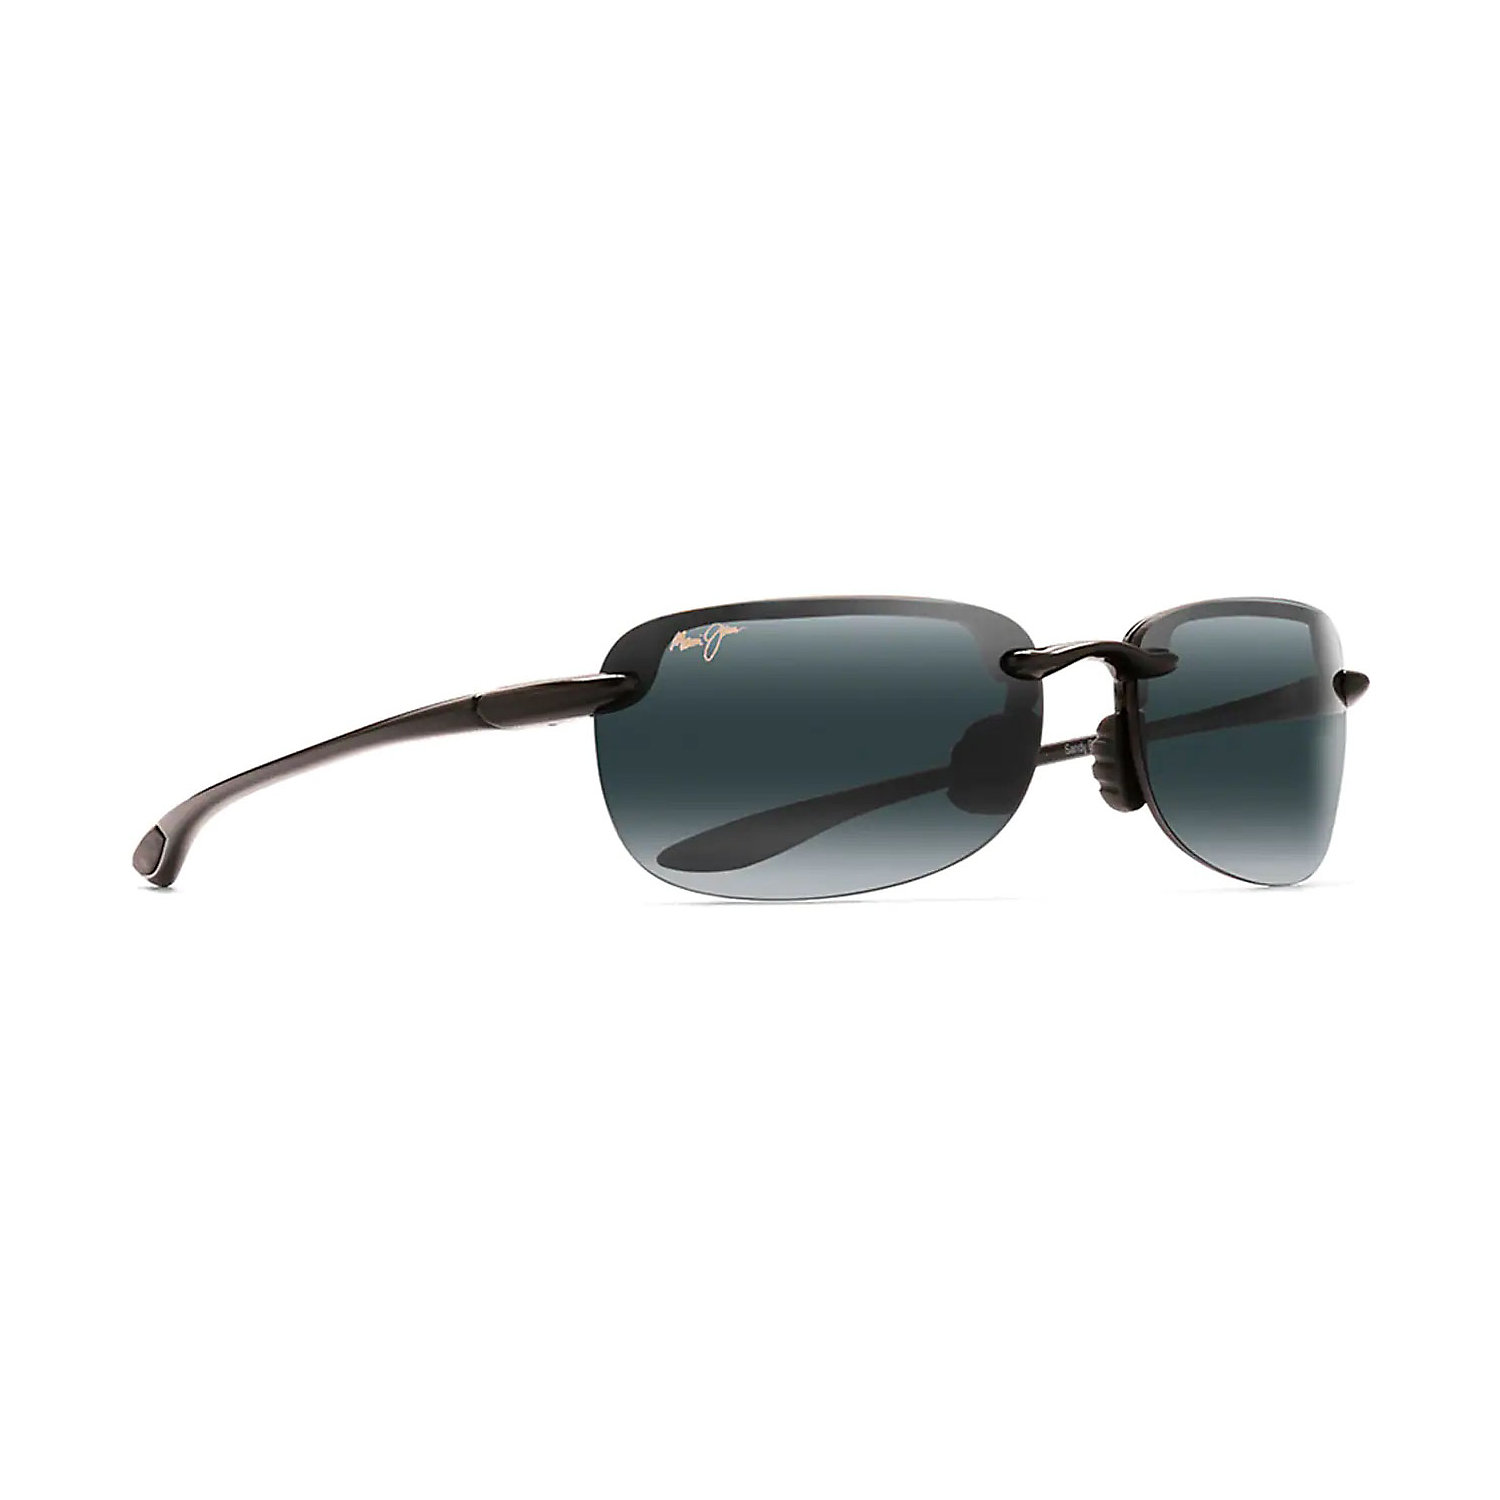 Maui Jim Sandy Beach Polarized Sunglasses - Universal Fit